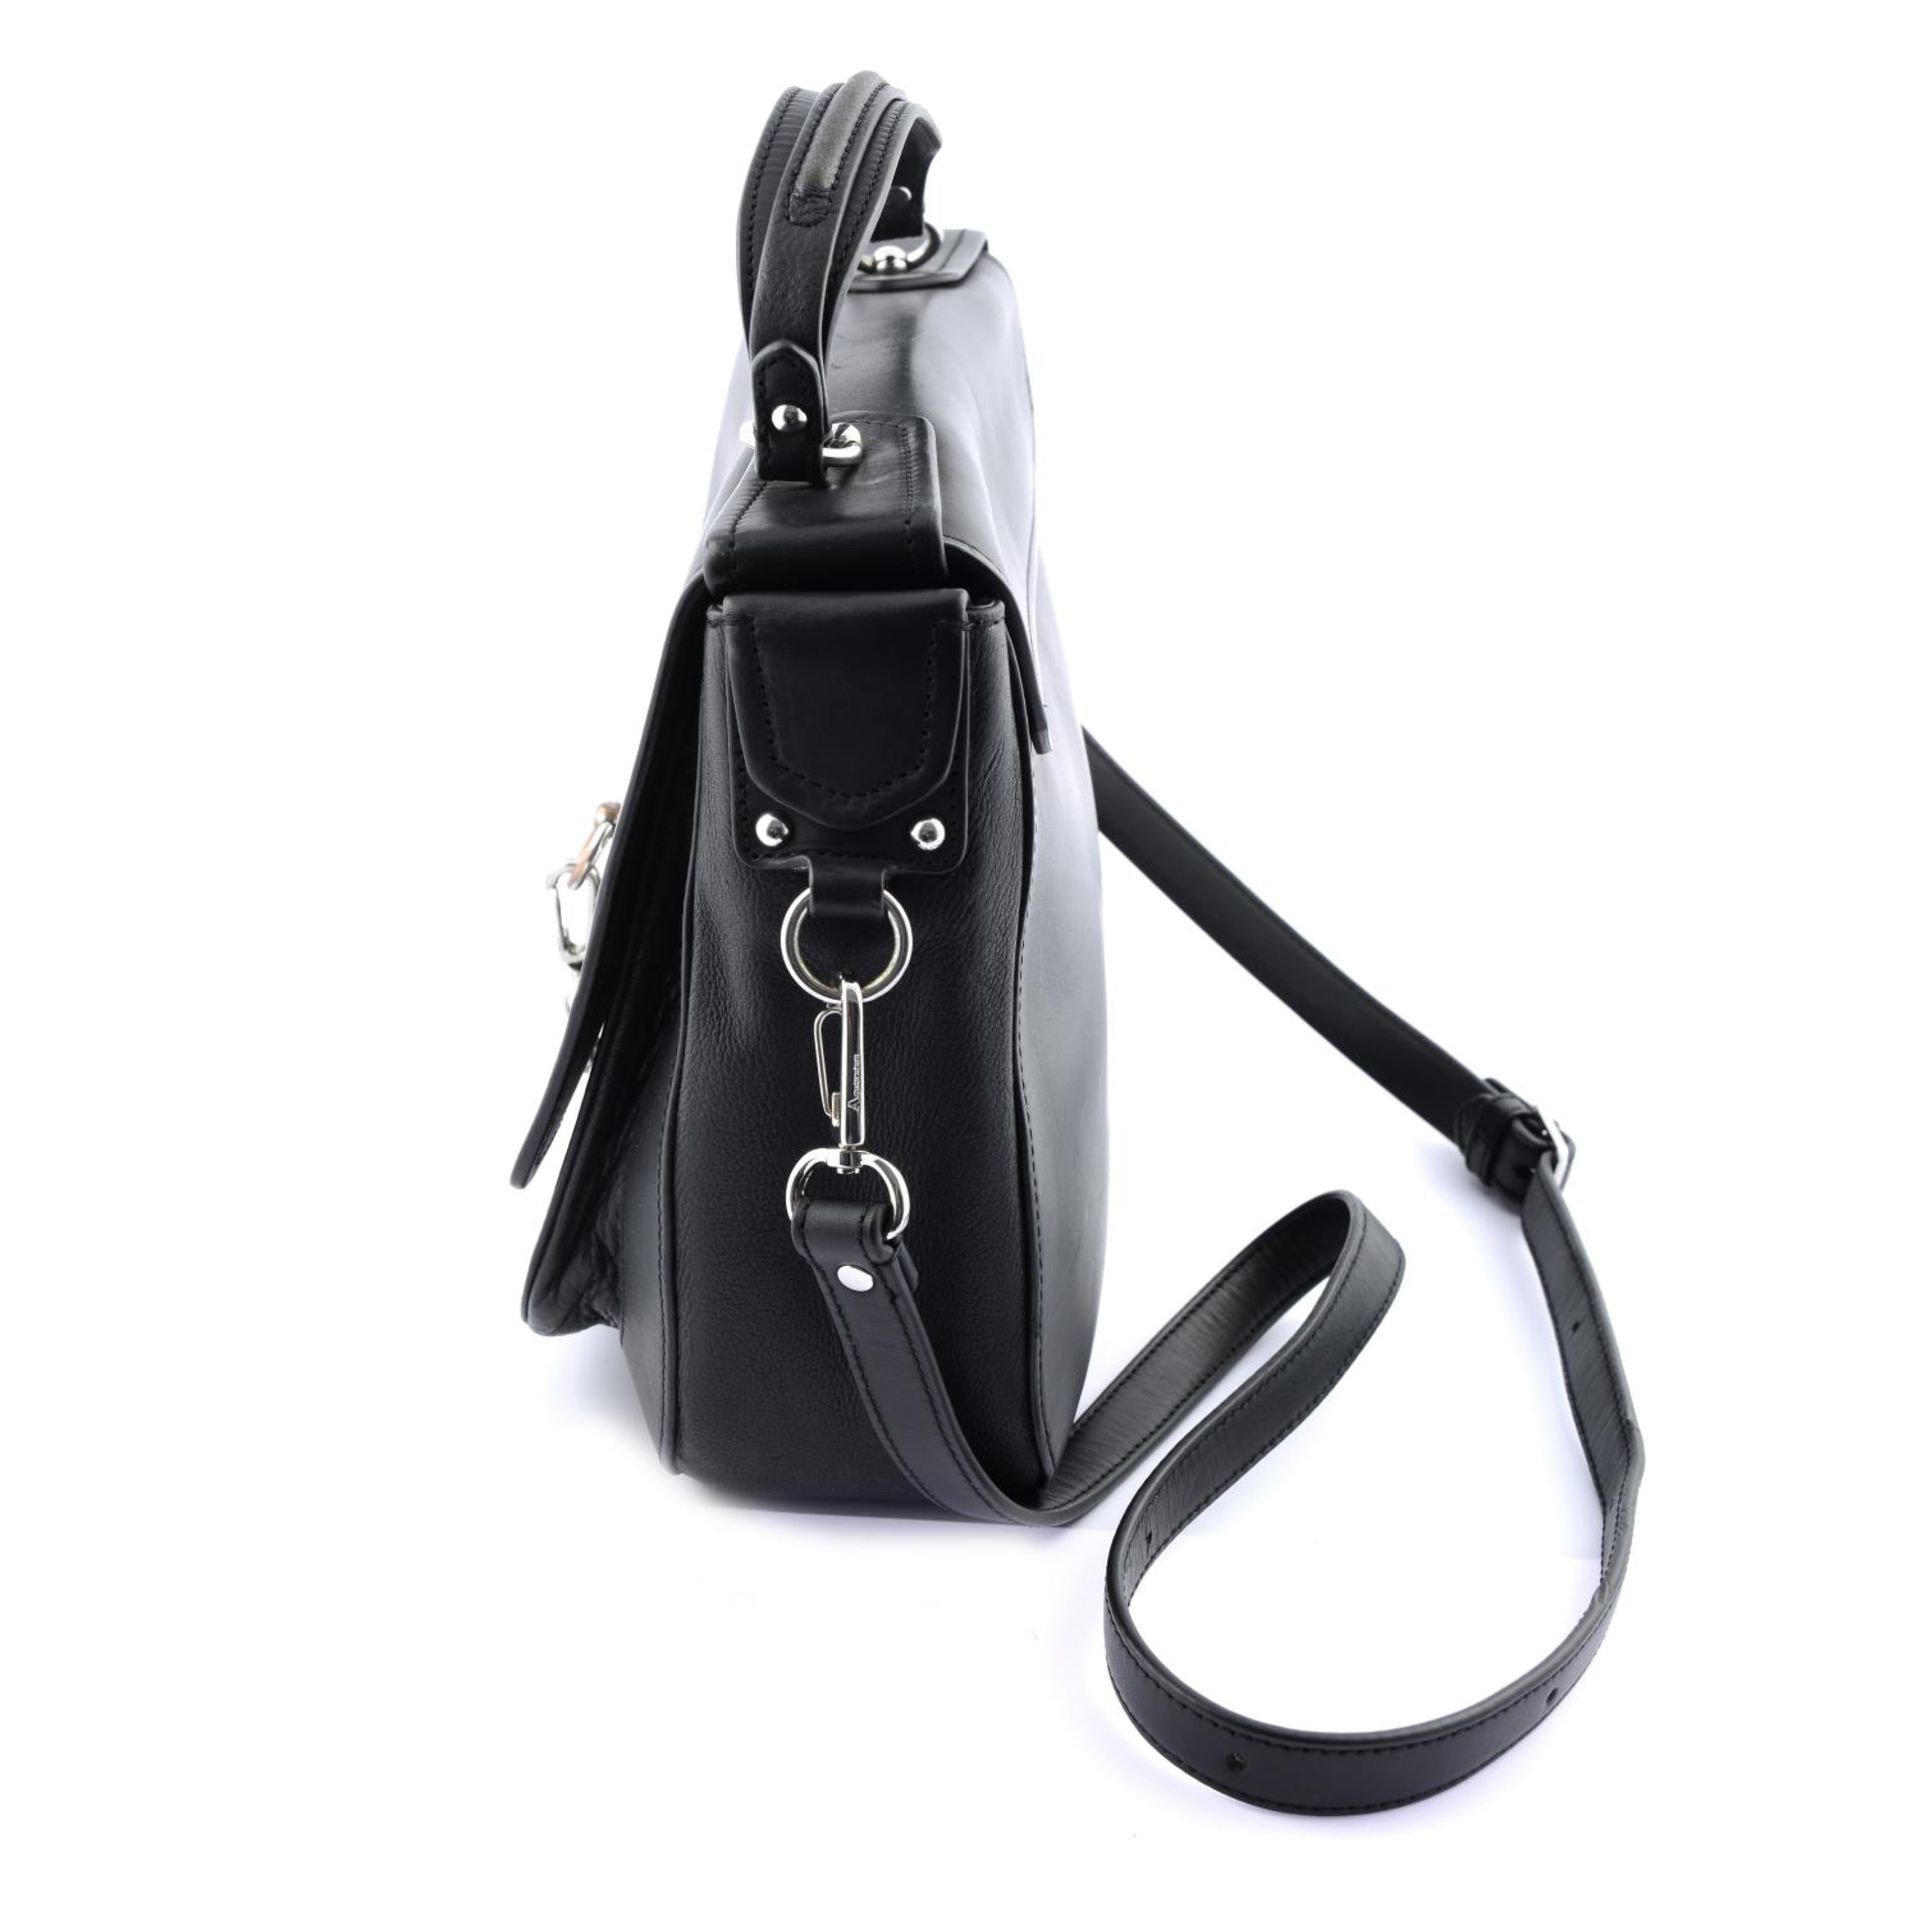 AQUASCUTUM - a black leather satchel. - Image 3 of 6